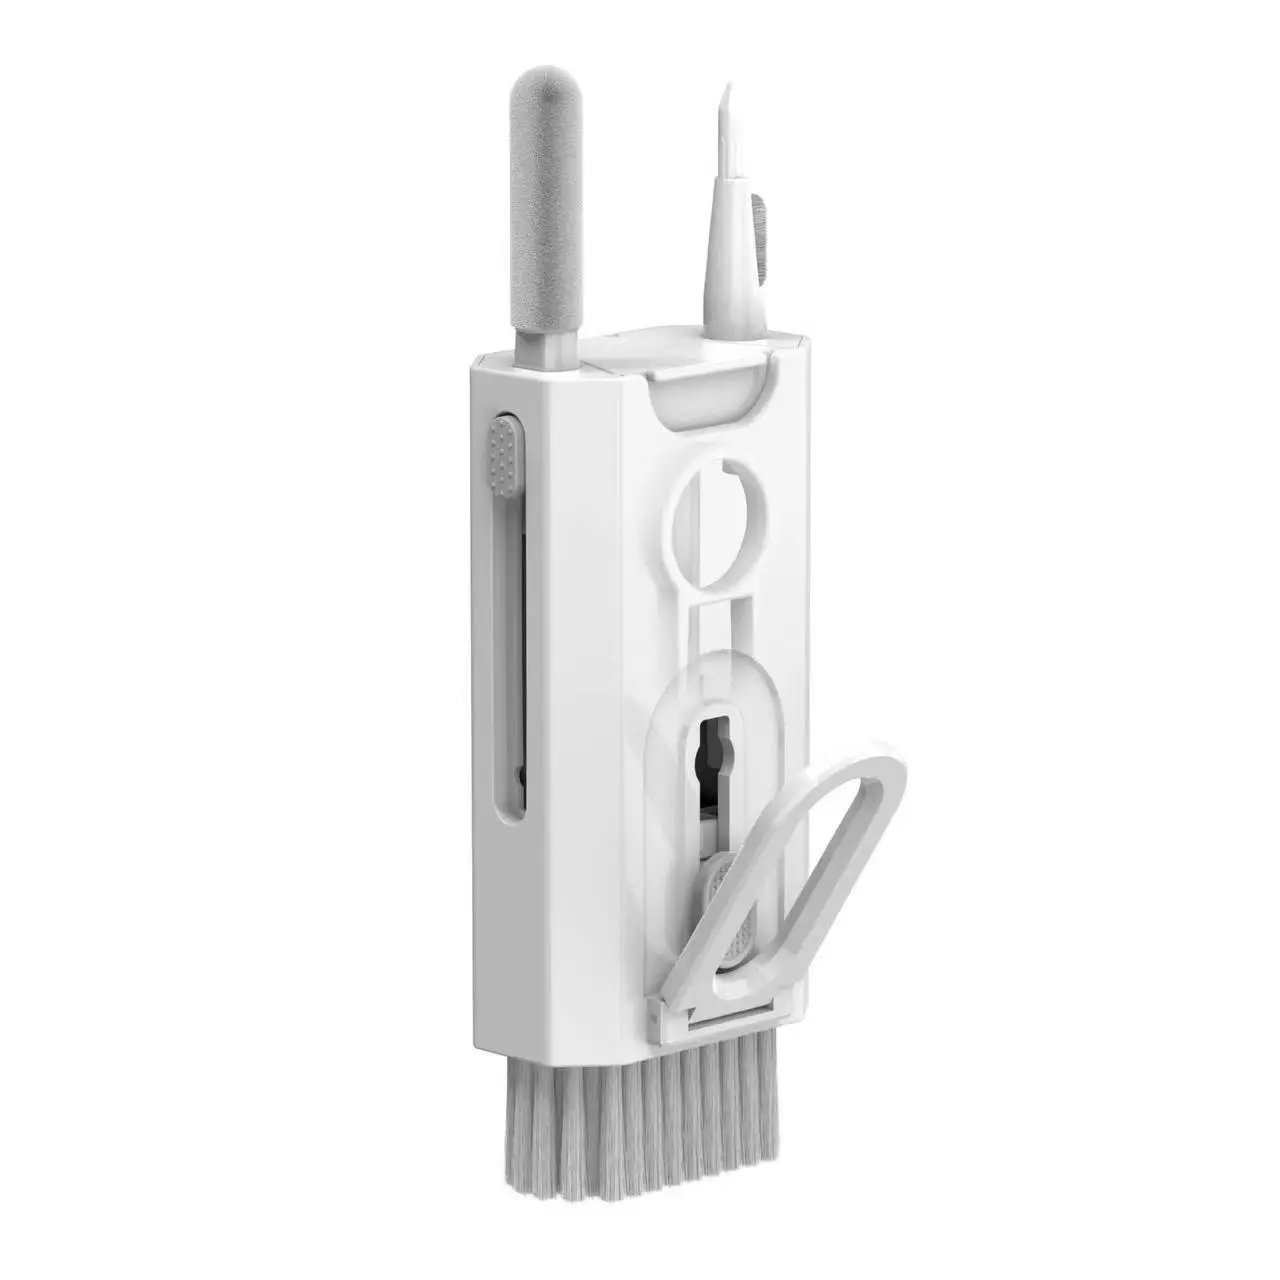 पोर्टेबल बहु-कार्यात्मक क्लीनर ब्रश किट मोबाइल फोन सफाई कलम उपकरण के लिए वायरलेस ईरफ़ोन सेलफोन कीबोर्ड